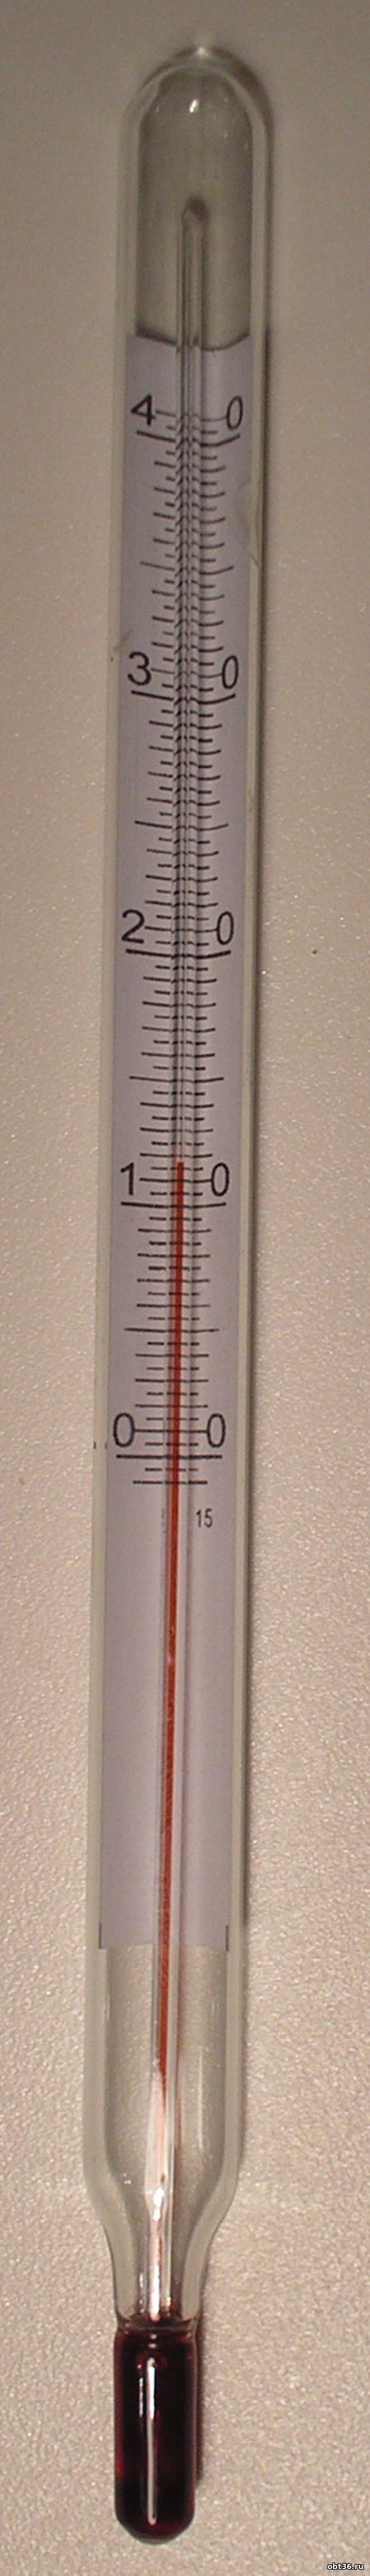 термометр для инкубатора